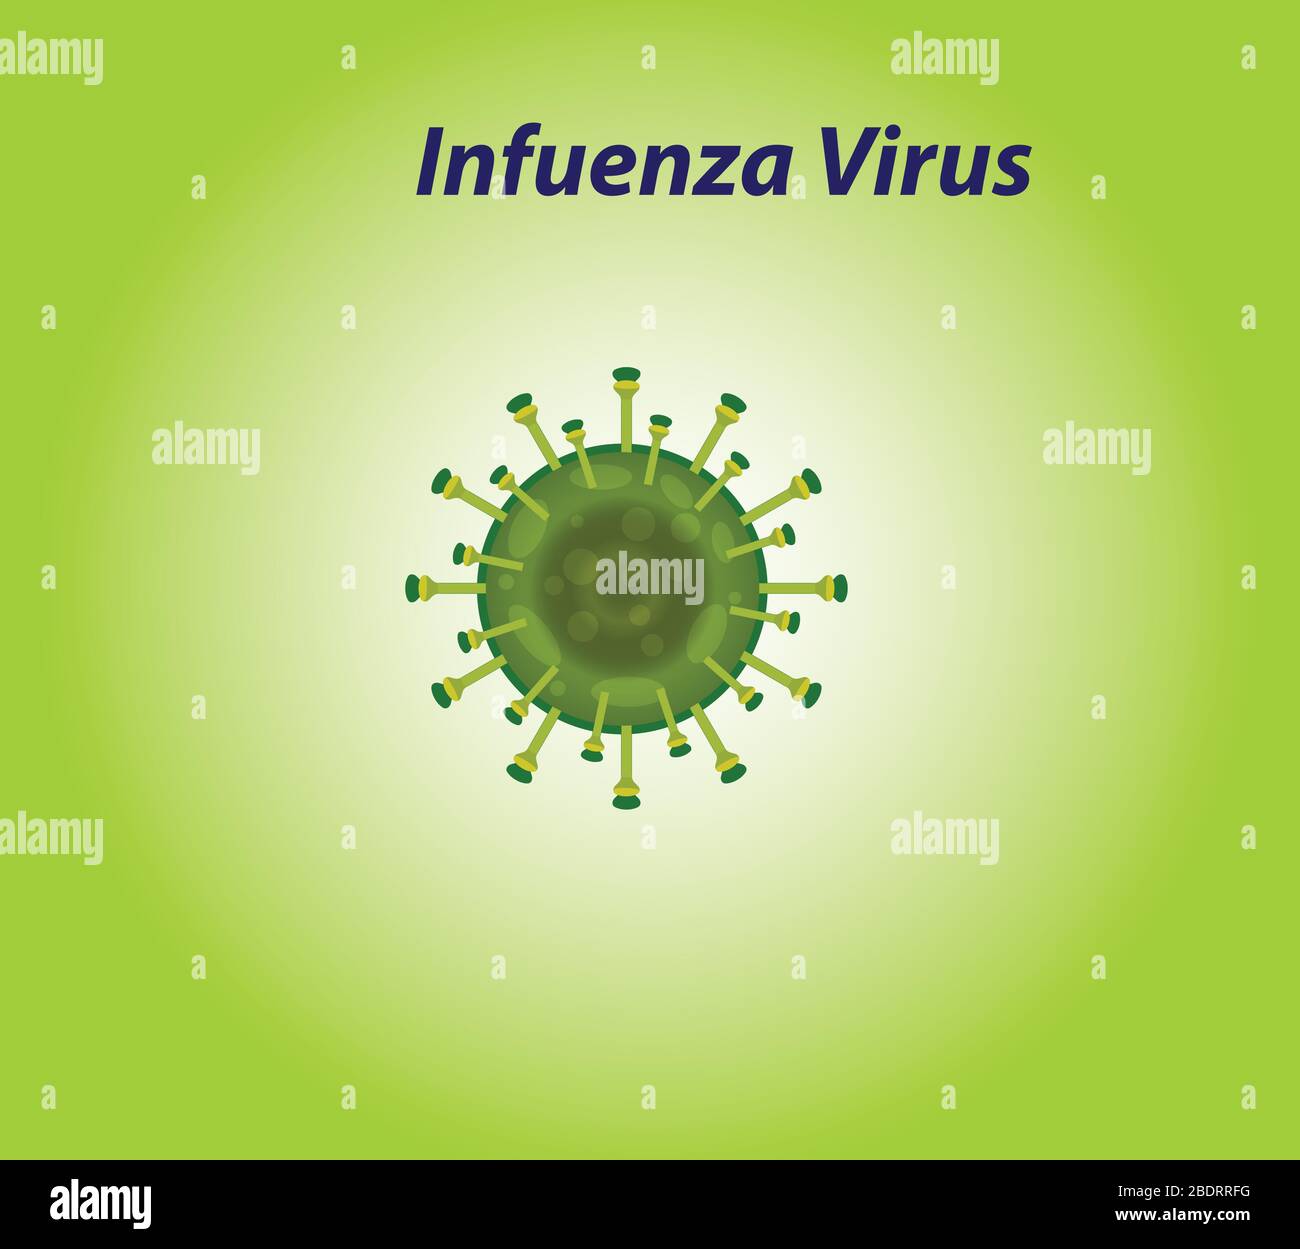 Abbildung des Covid-19-Virus-Coronavirus-Vektors. 3D-Ansicht des Corona-Influenzavirus. Grüner Virus mit grünem Hintergrund. Stock Vektor